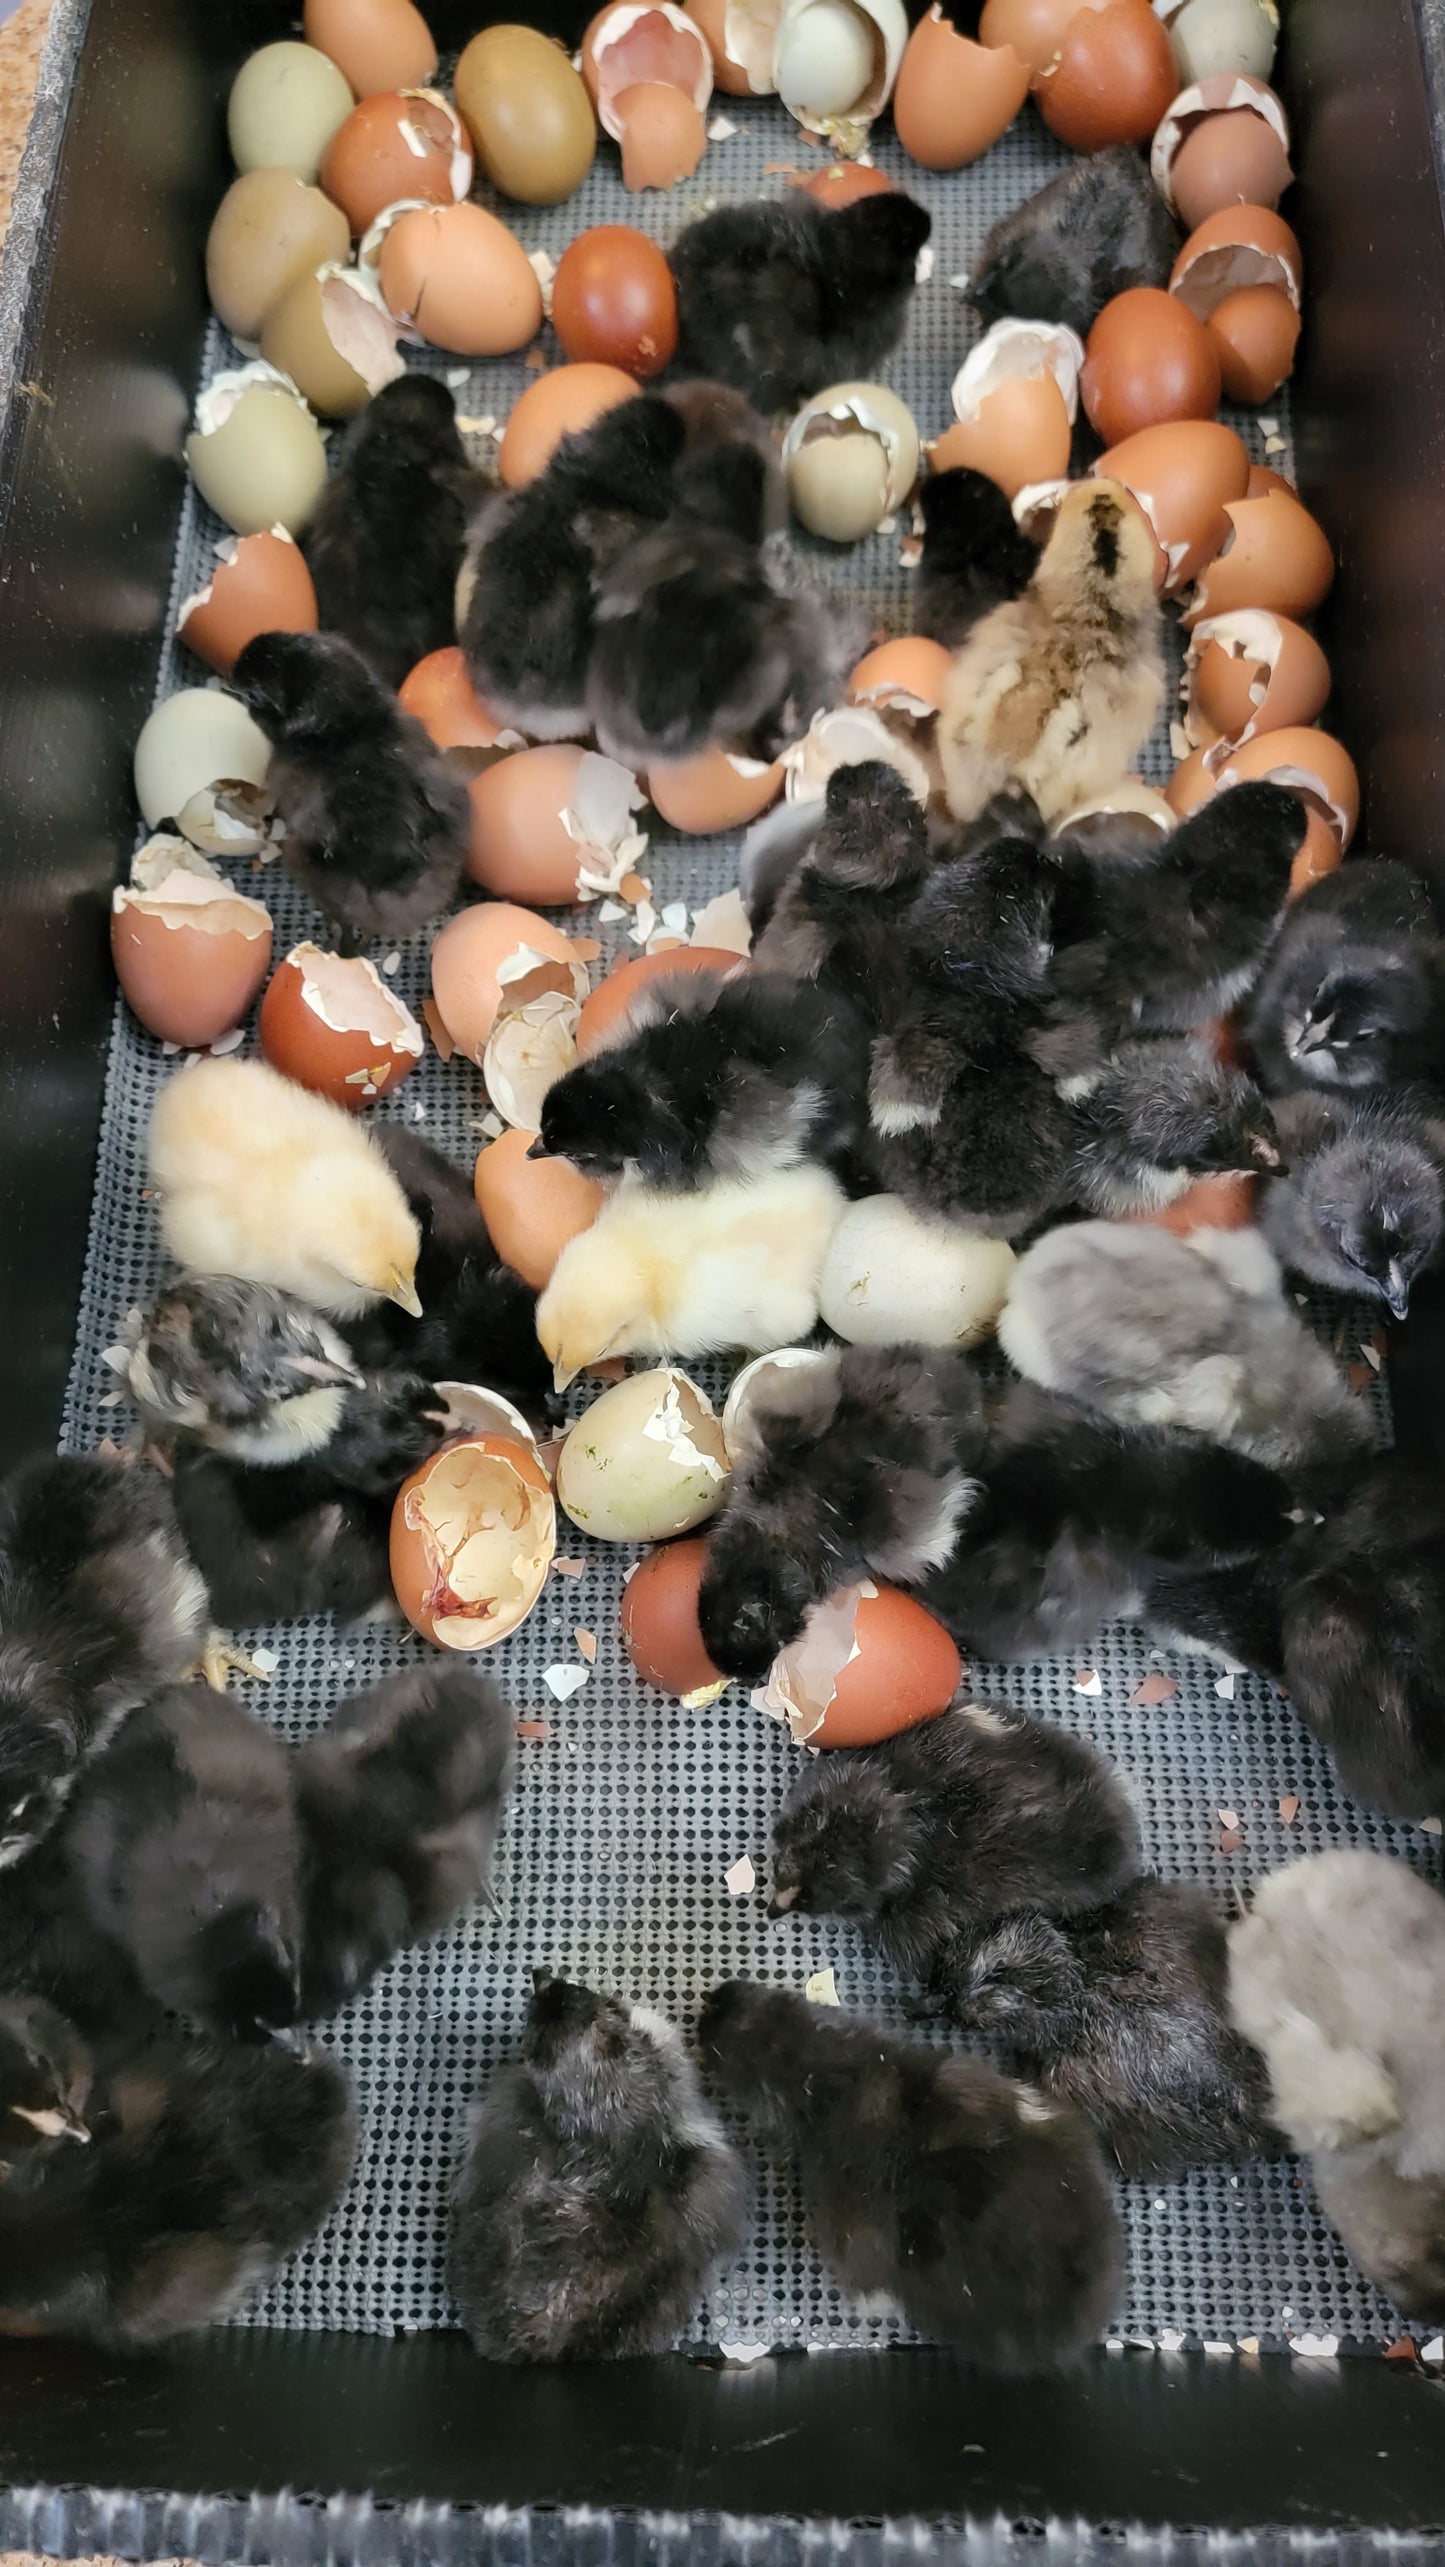 10+ Barnyard Mix Hatching Eggs